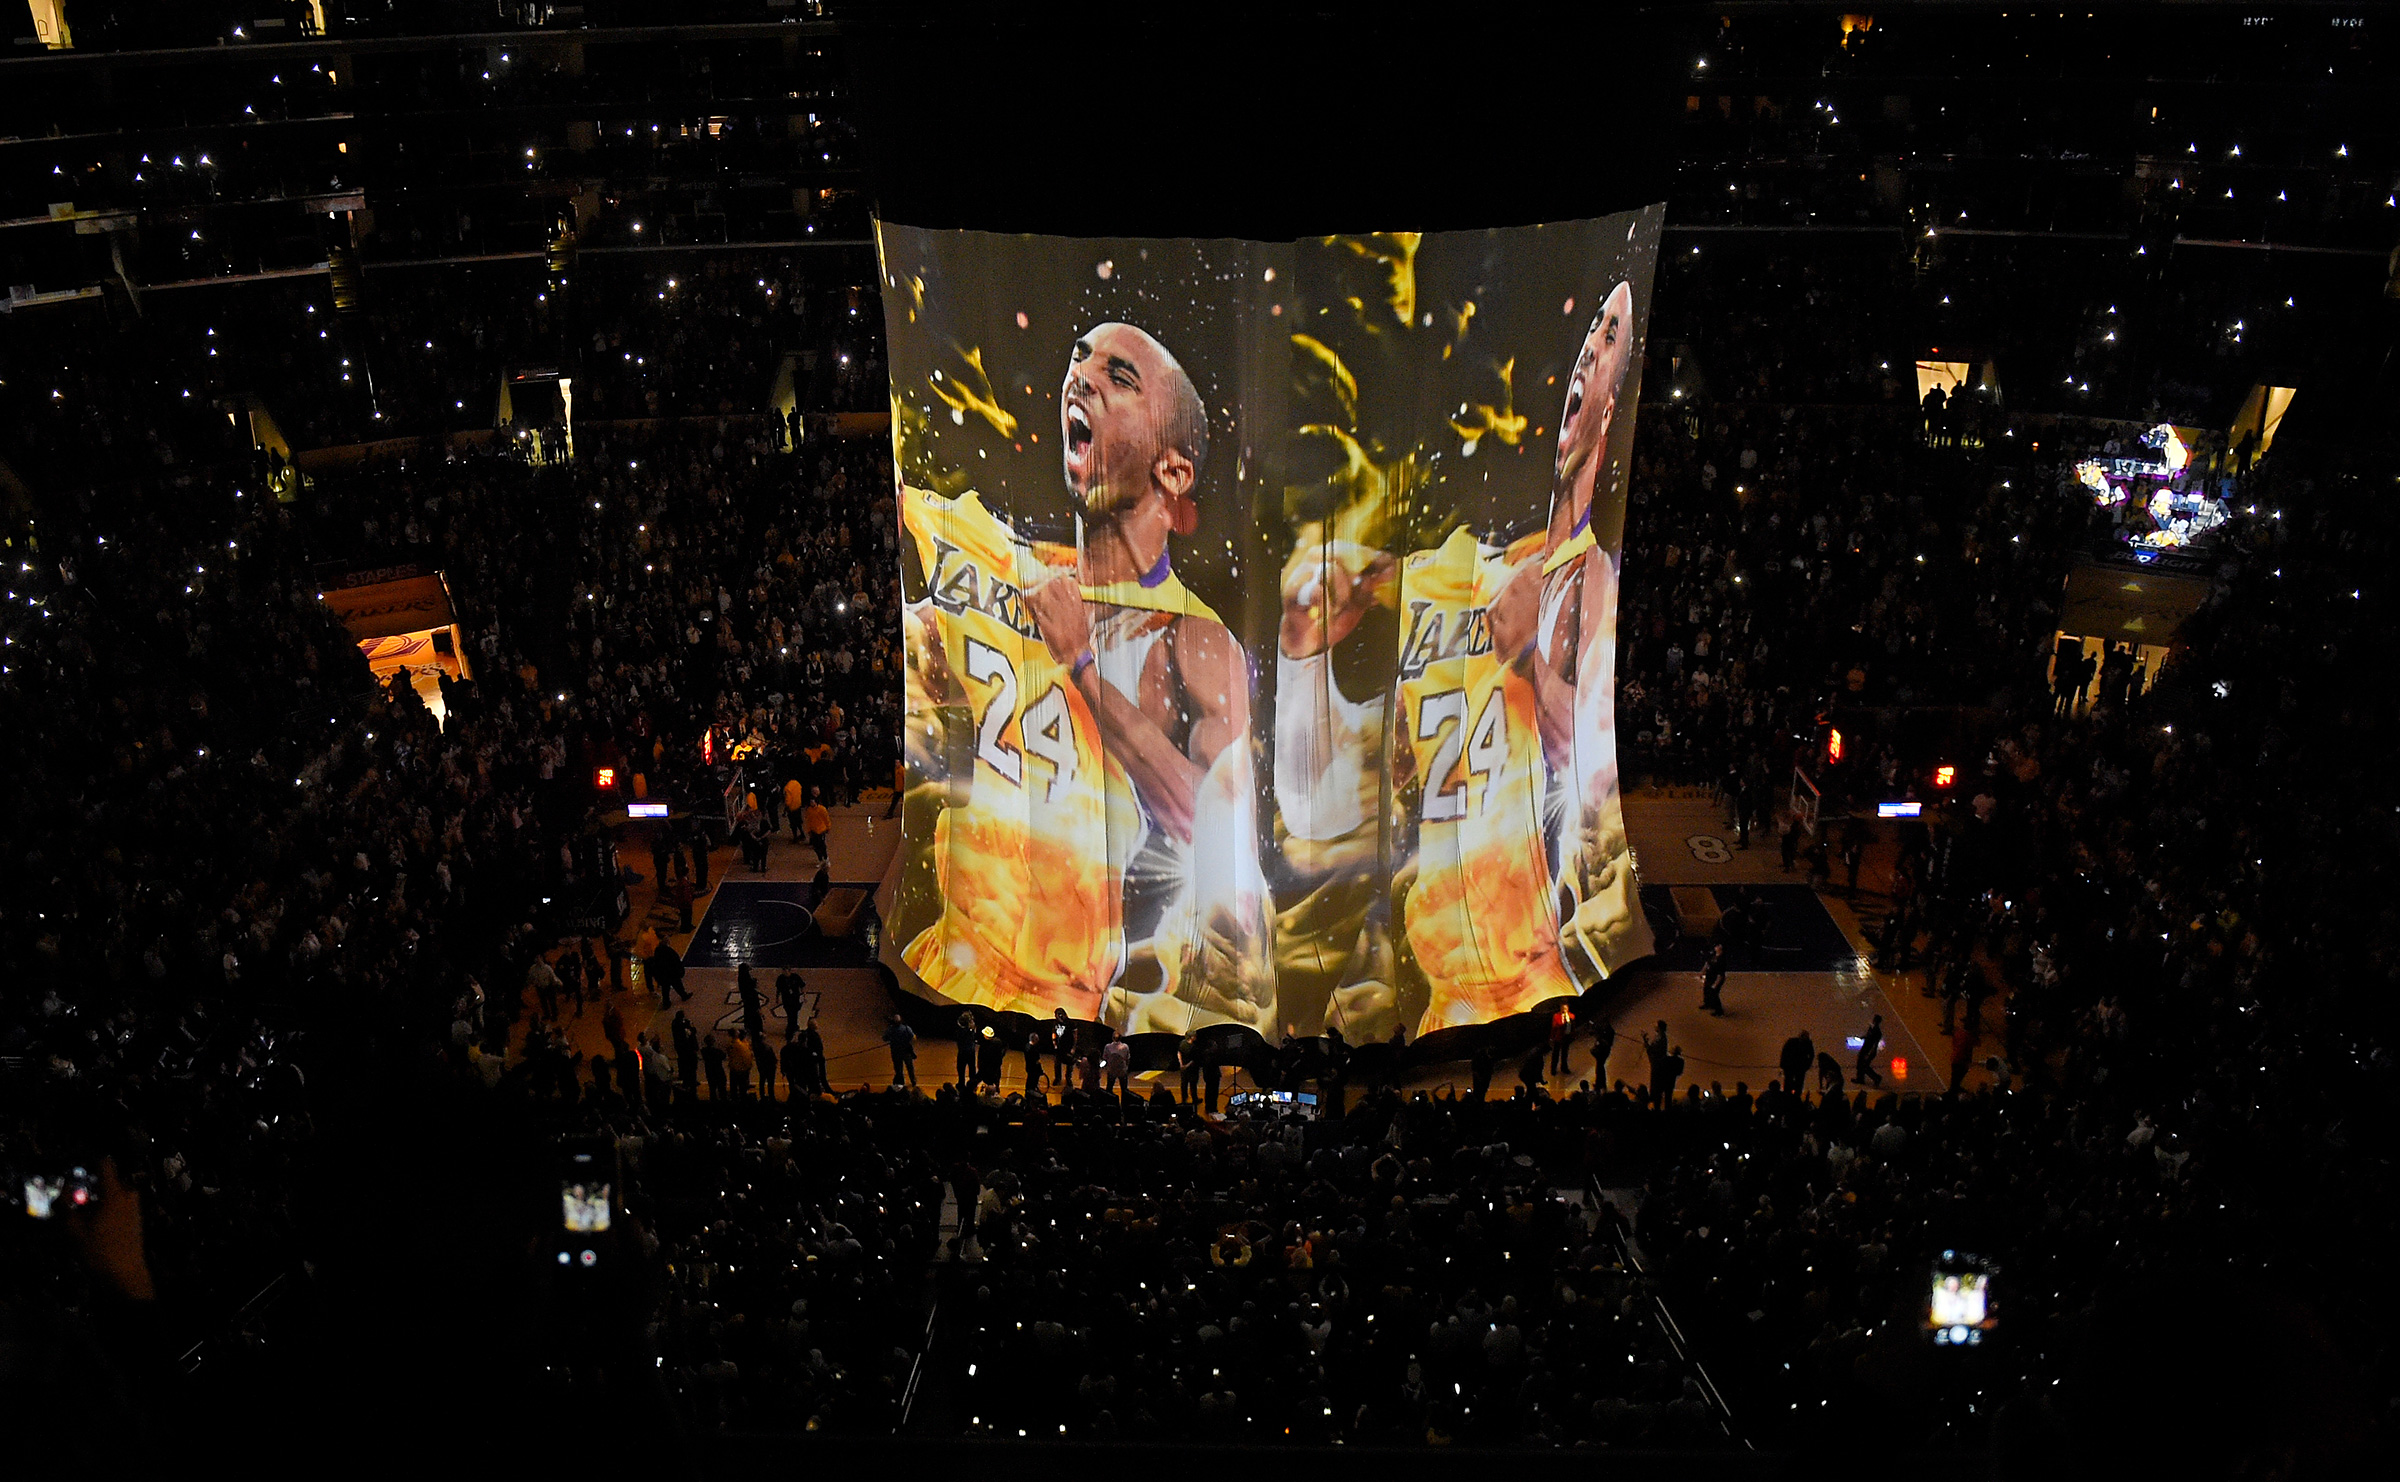 Kobe Bryant image is displayed to the crowd